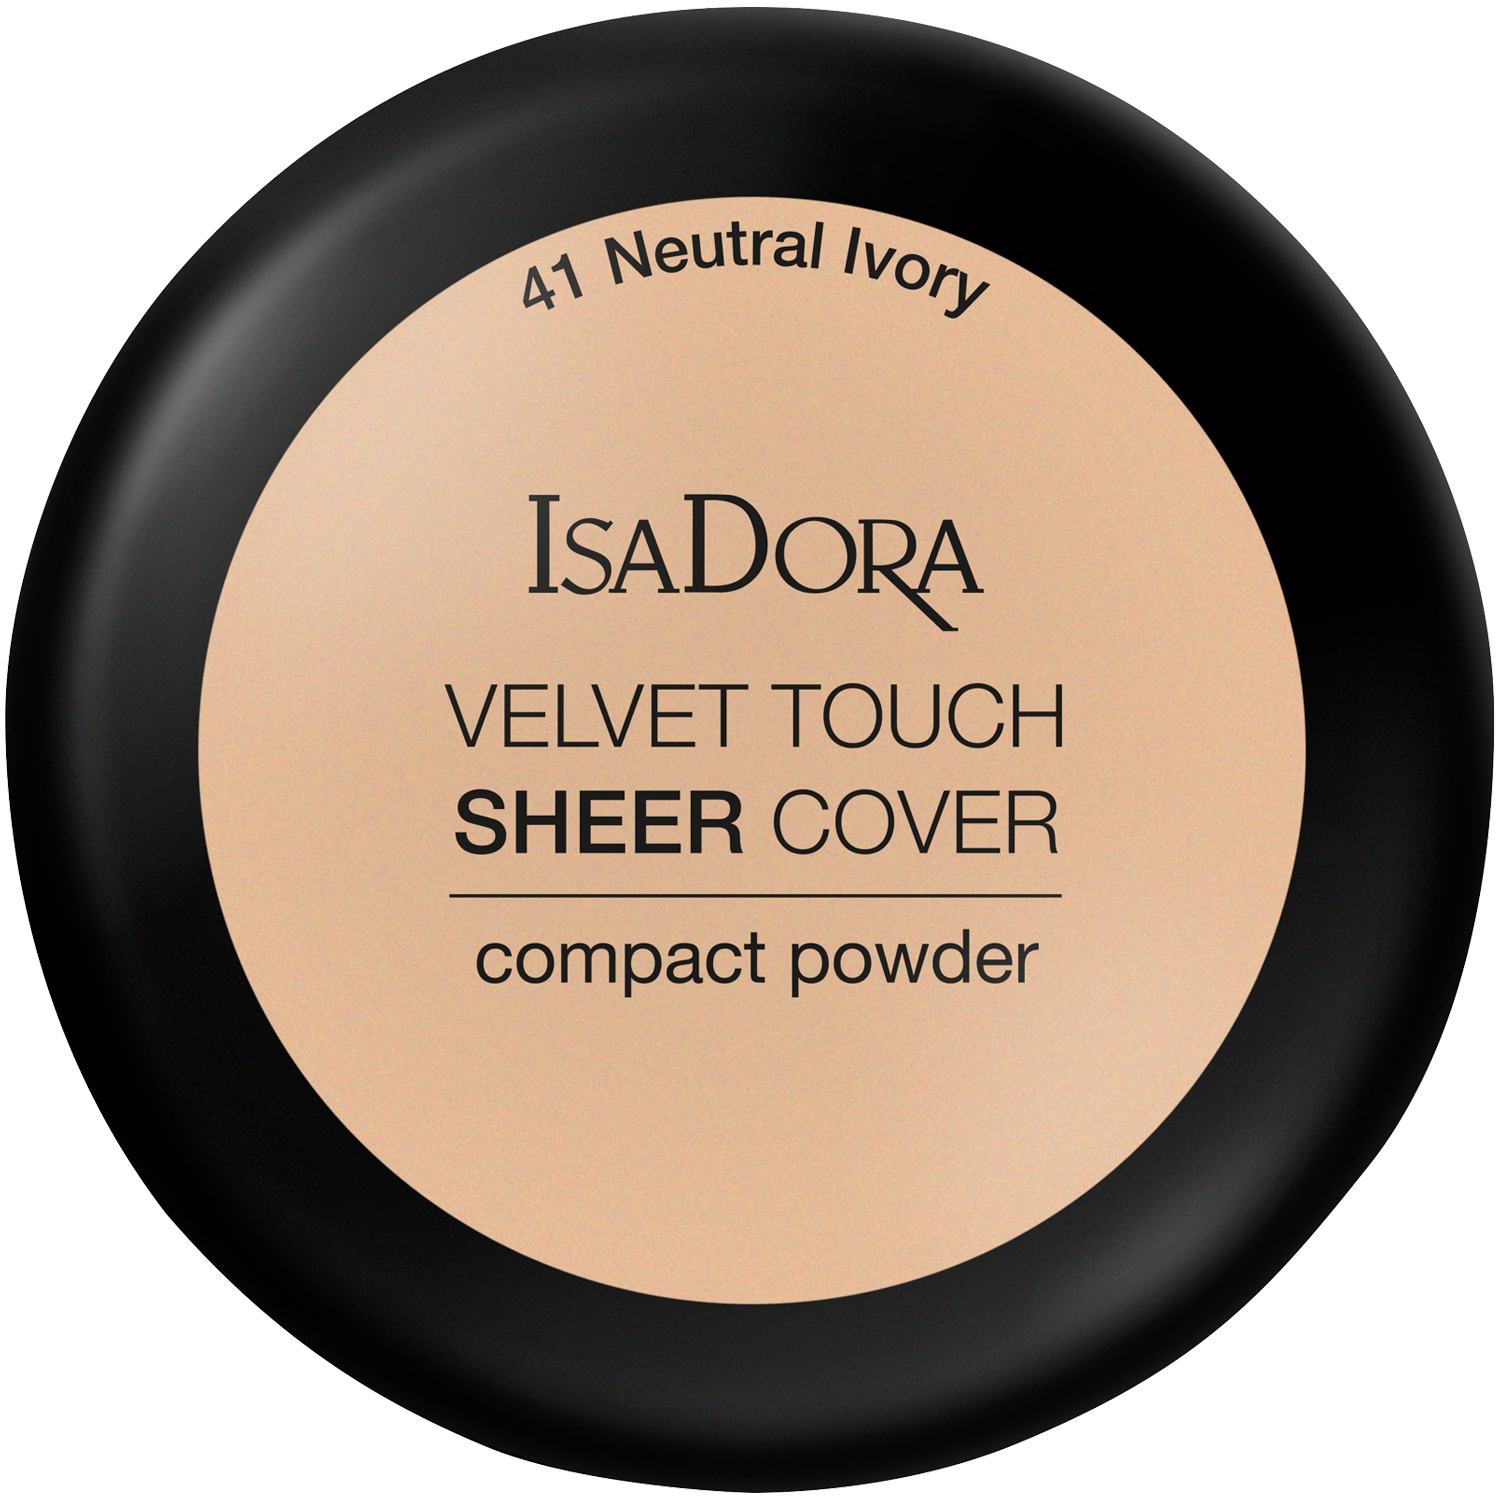 la femme 5588 velvet touch face powder banana Пудра для лица 41 нейтральная слоновая кость Isadora Velvet Touch Sheer Cover, 7,5 гр